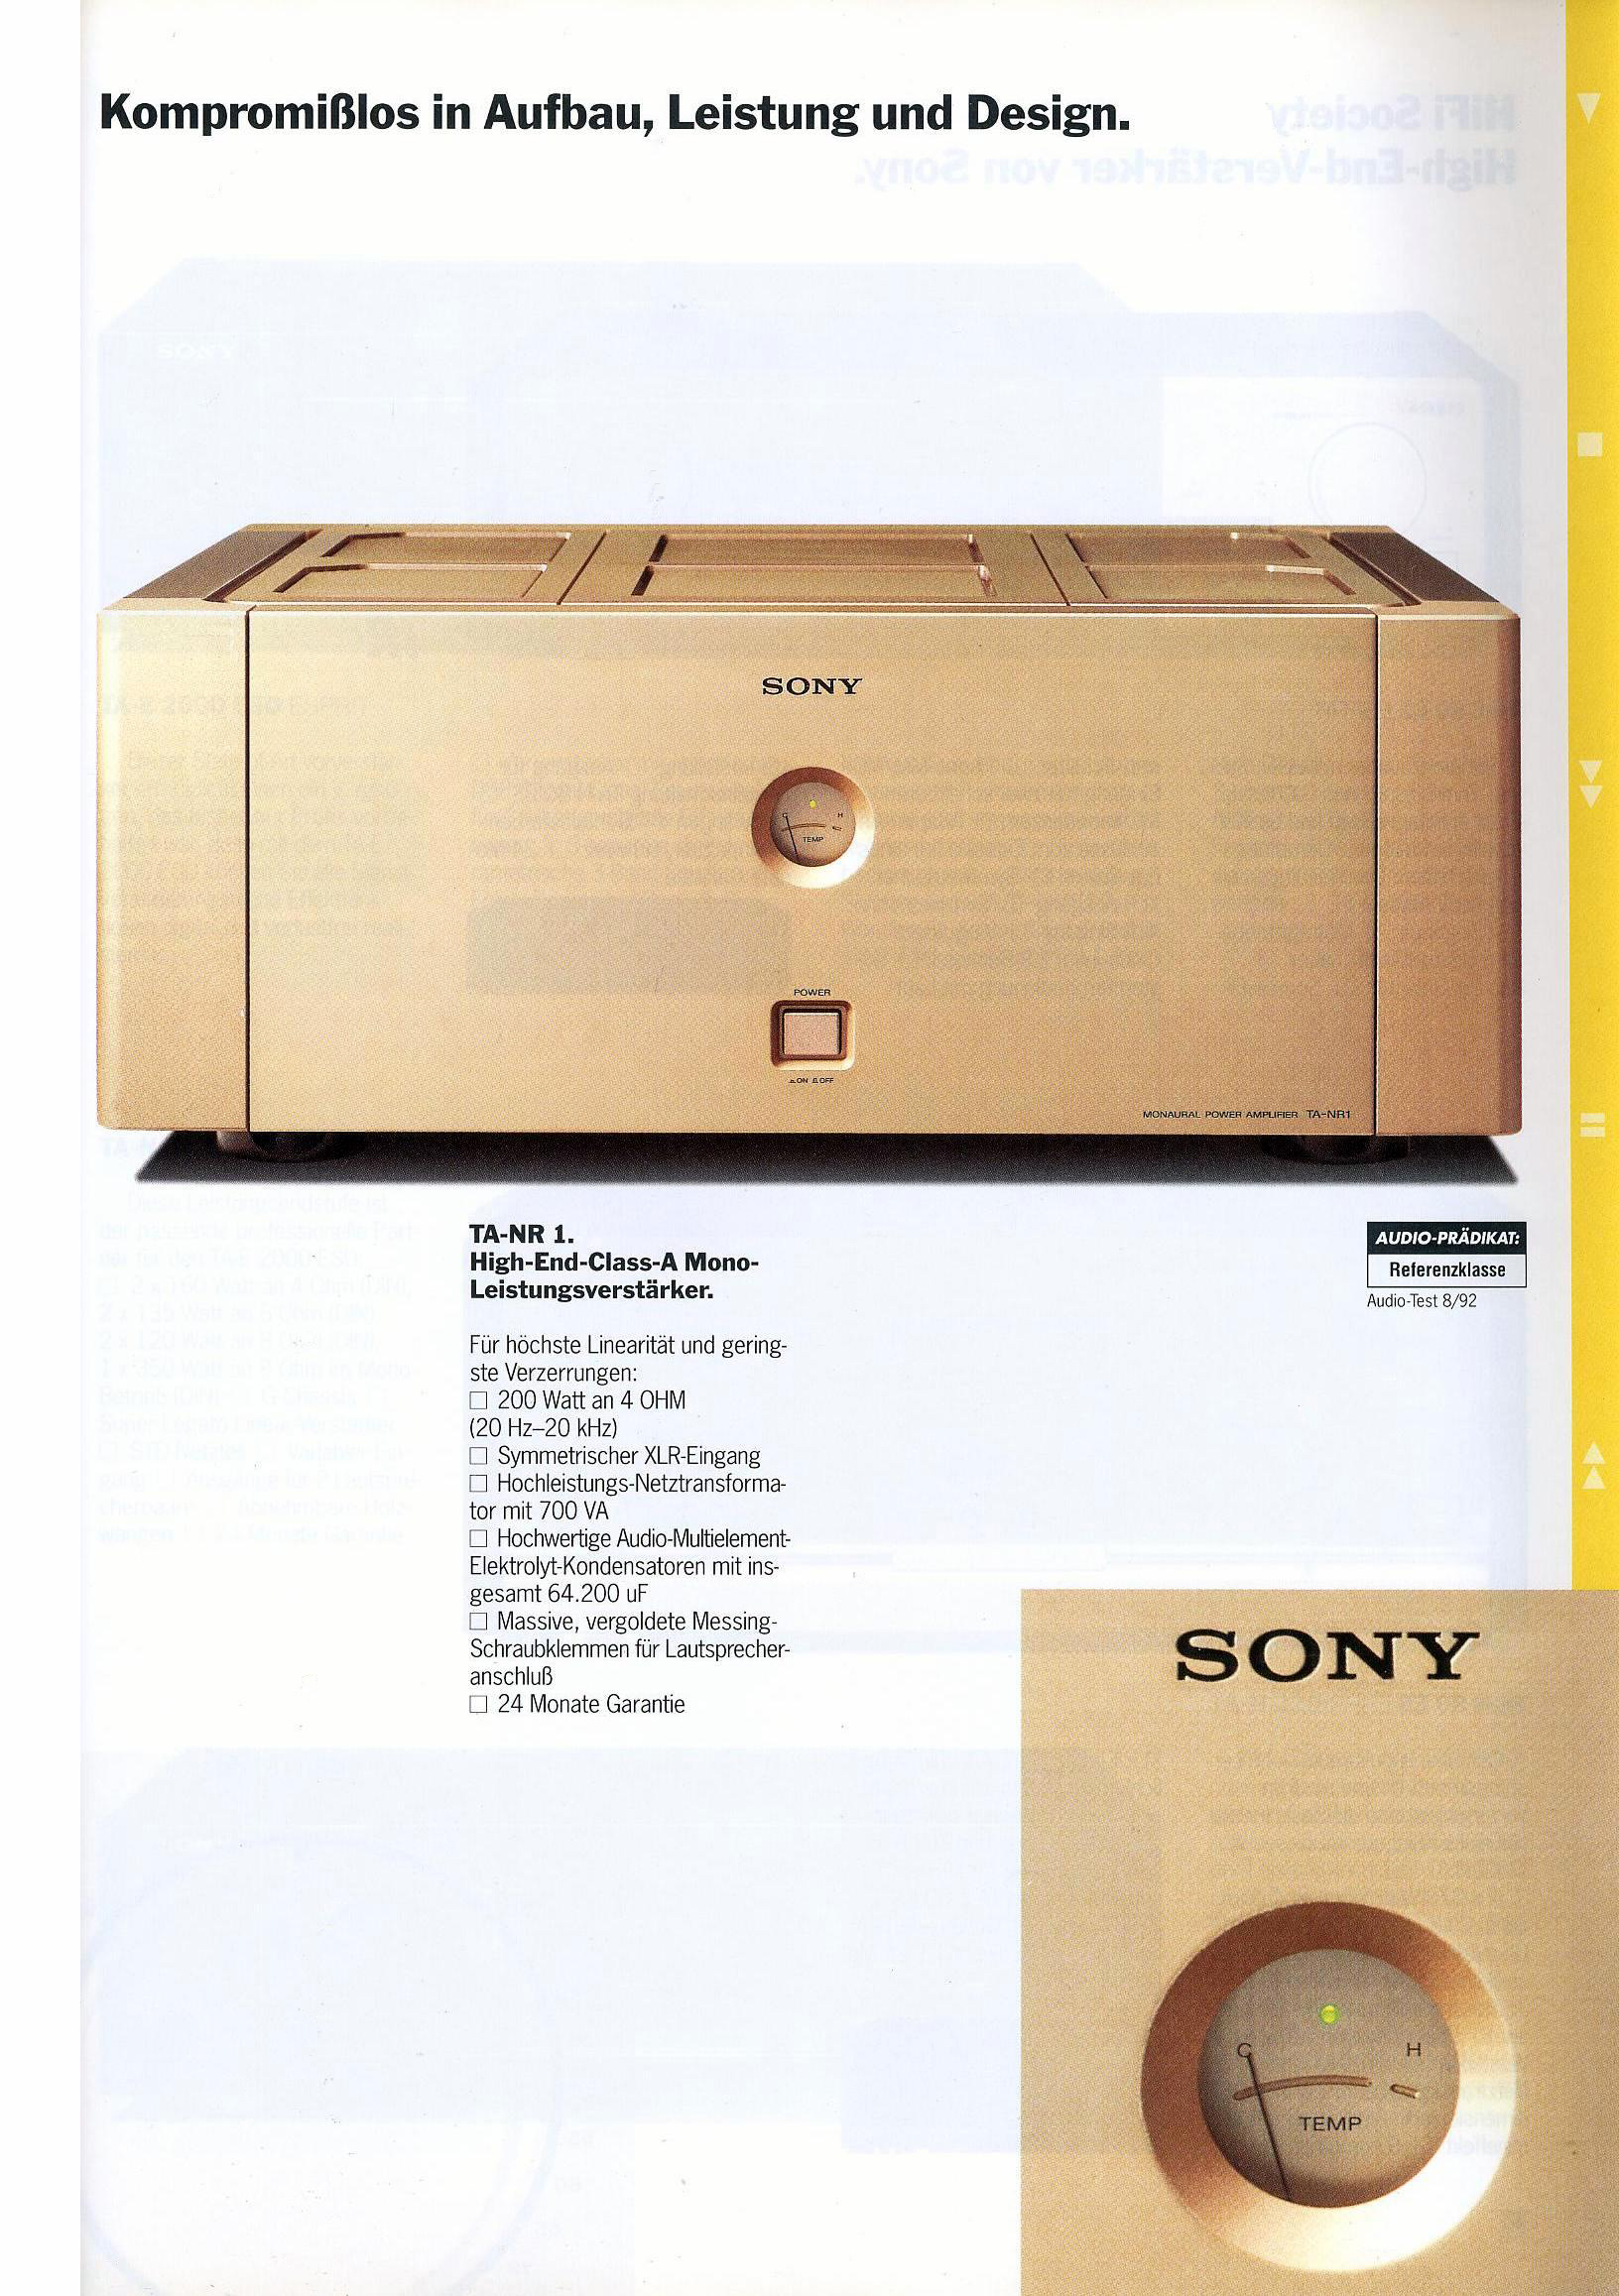 Sony TA-NR 1-Prospekt-1993.jpg